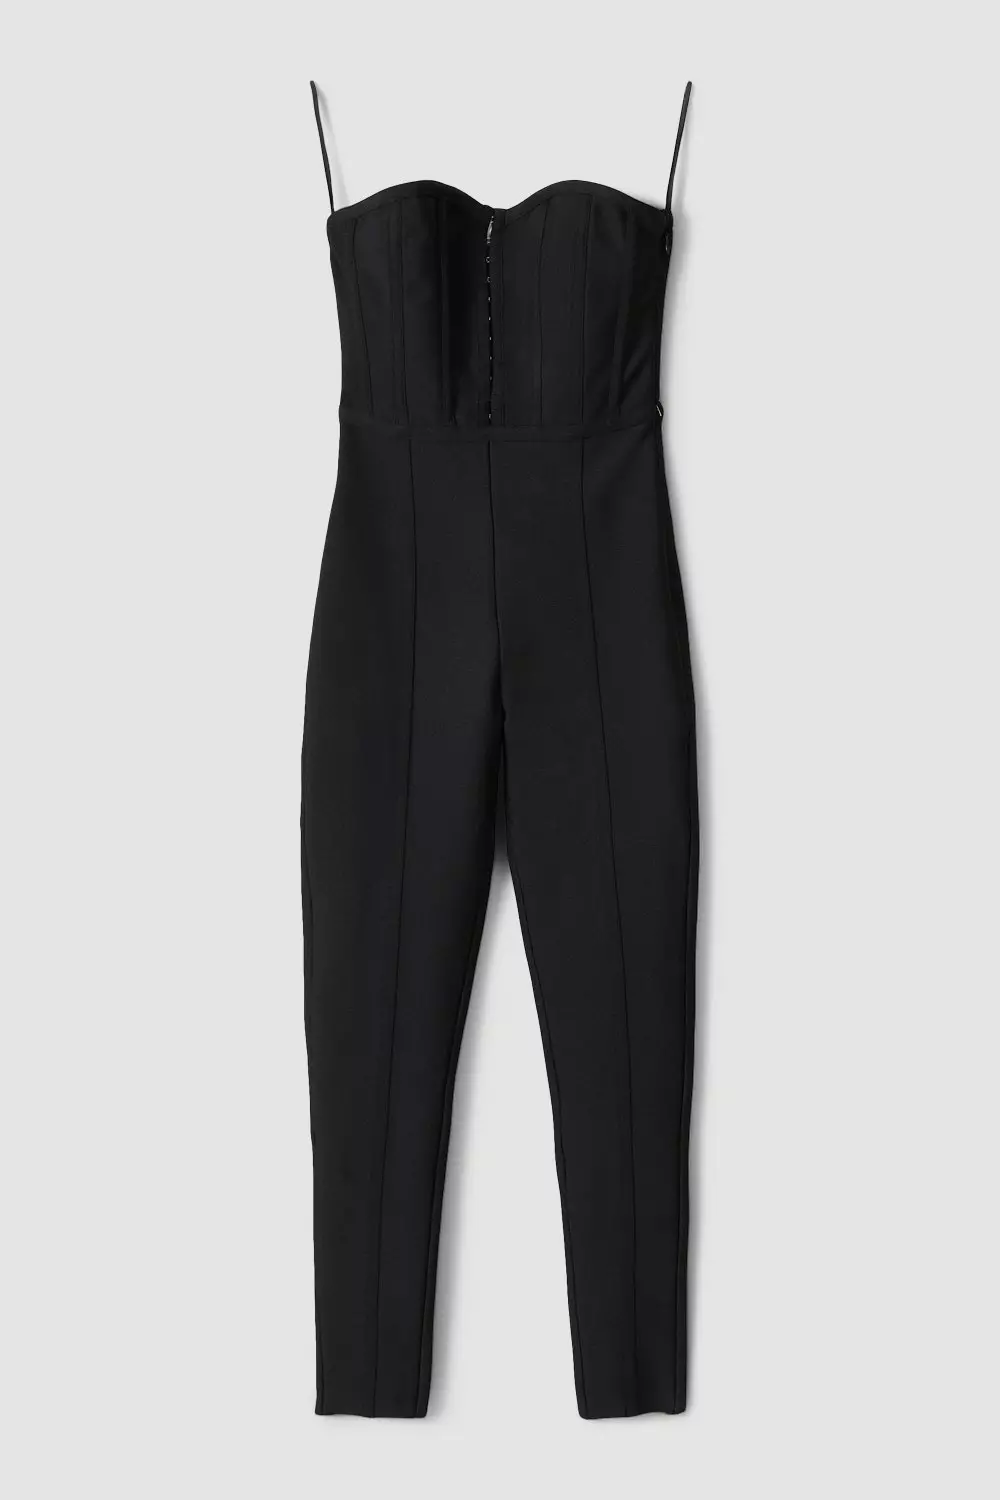 Zara, Pants & Jumpsuits, Zara Corset Denim Jumpsuit